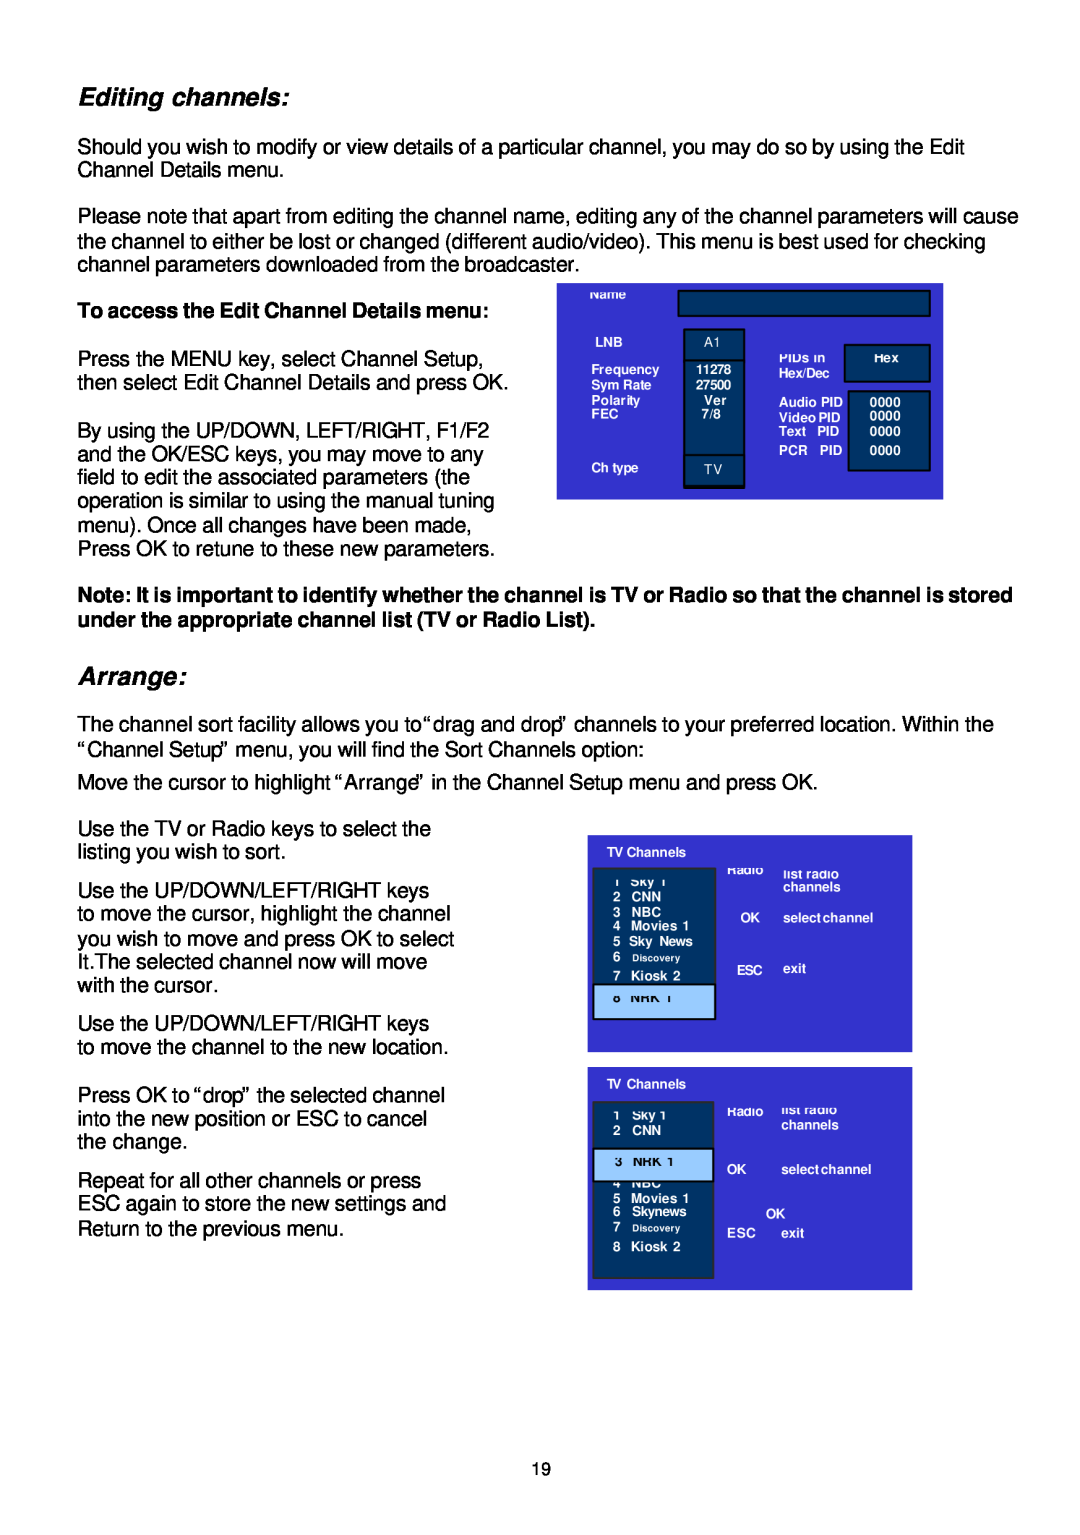 Samsung SADPCI-202 instruction manual Editing channels, Arrange, To access the Edit Channel Details menu 